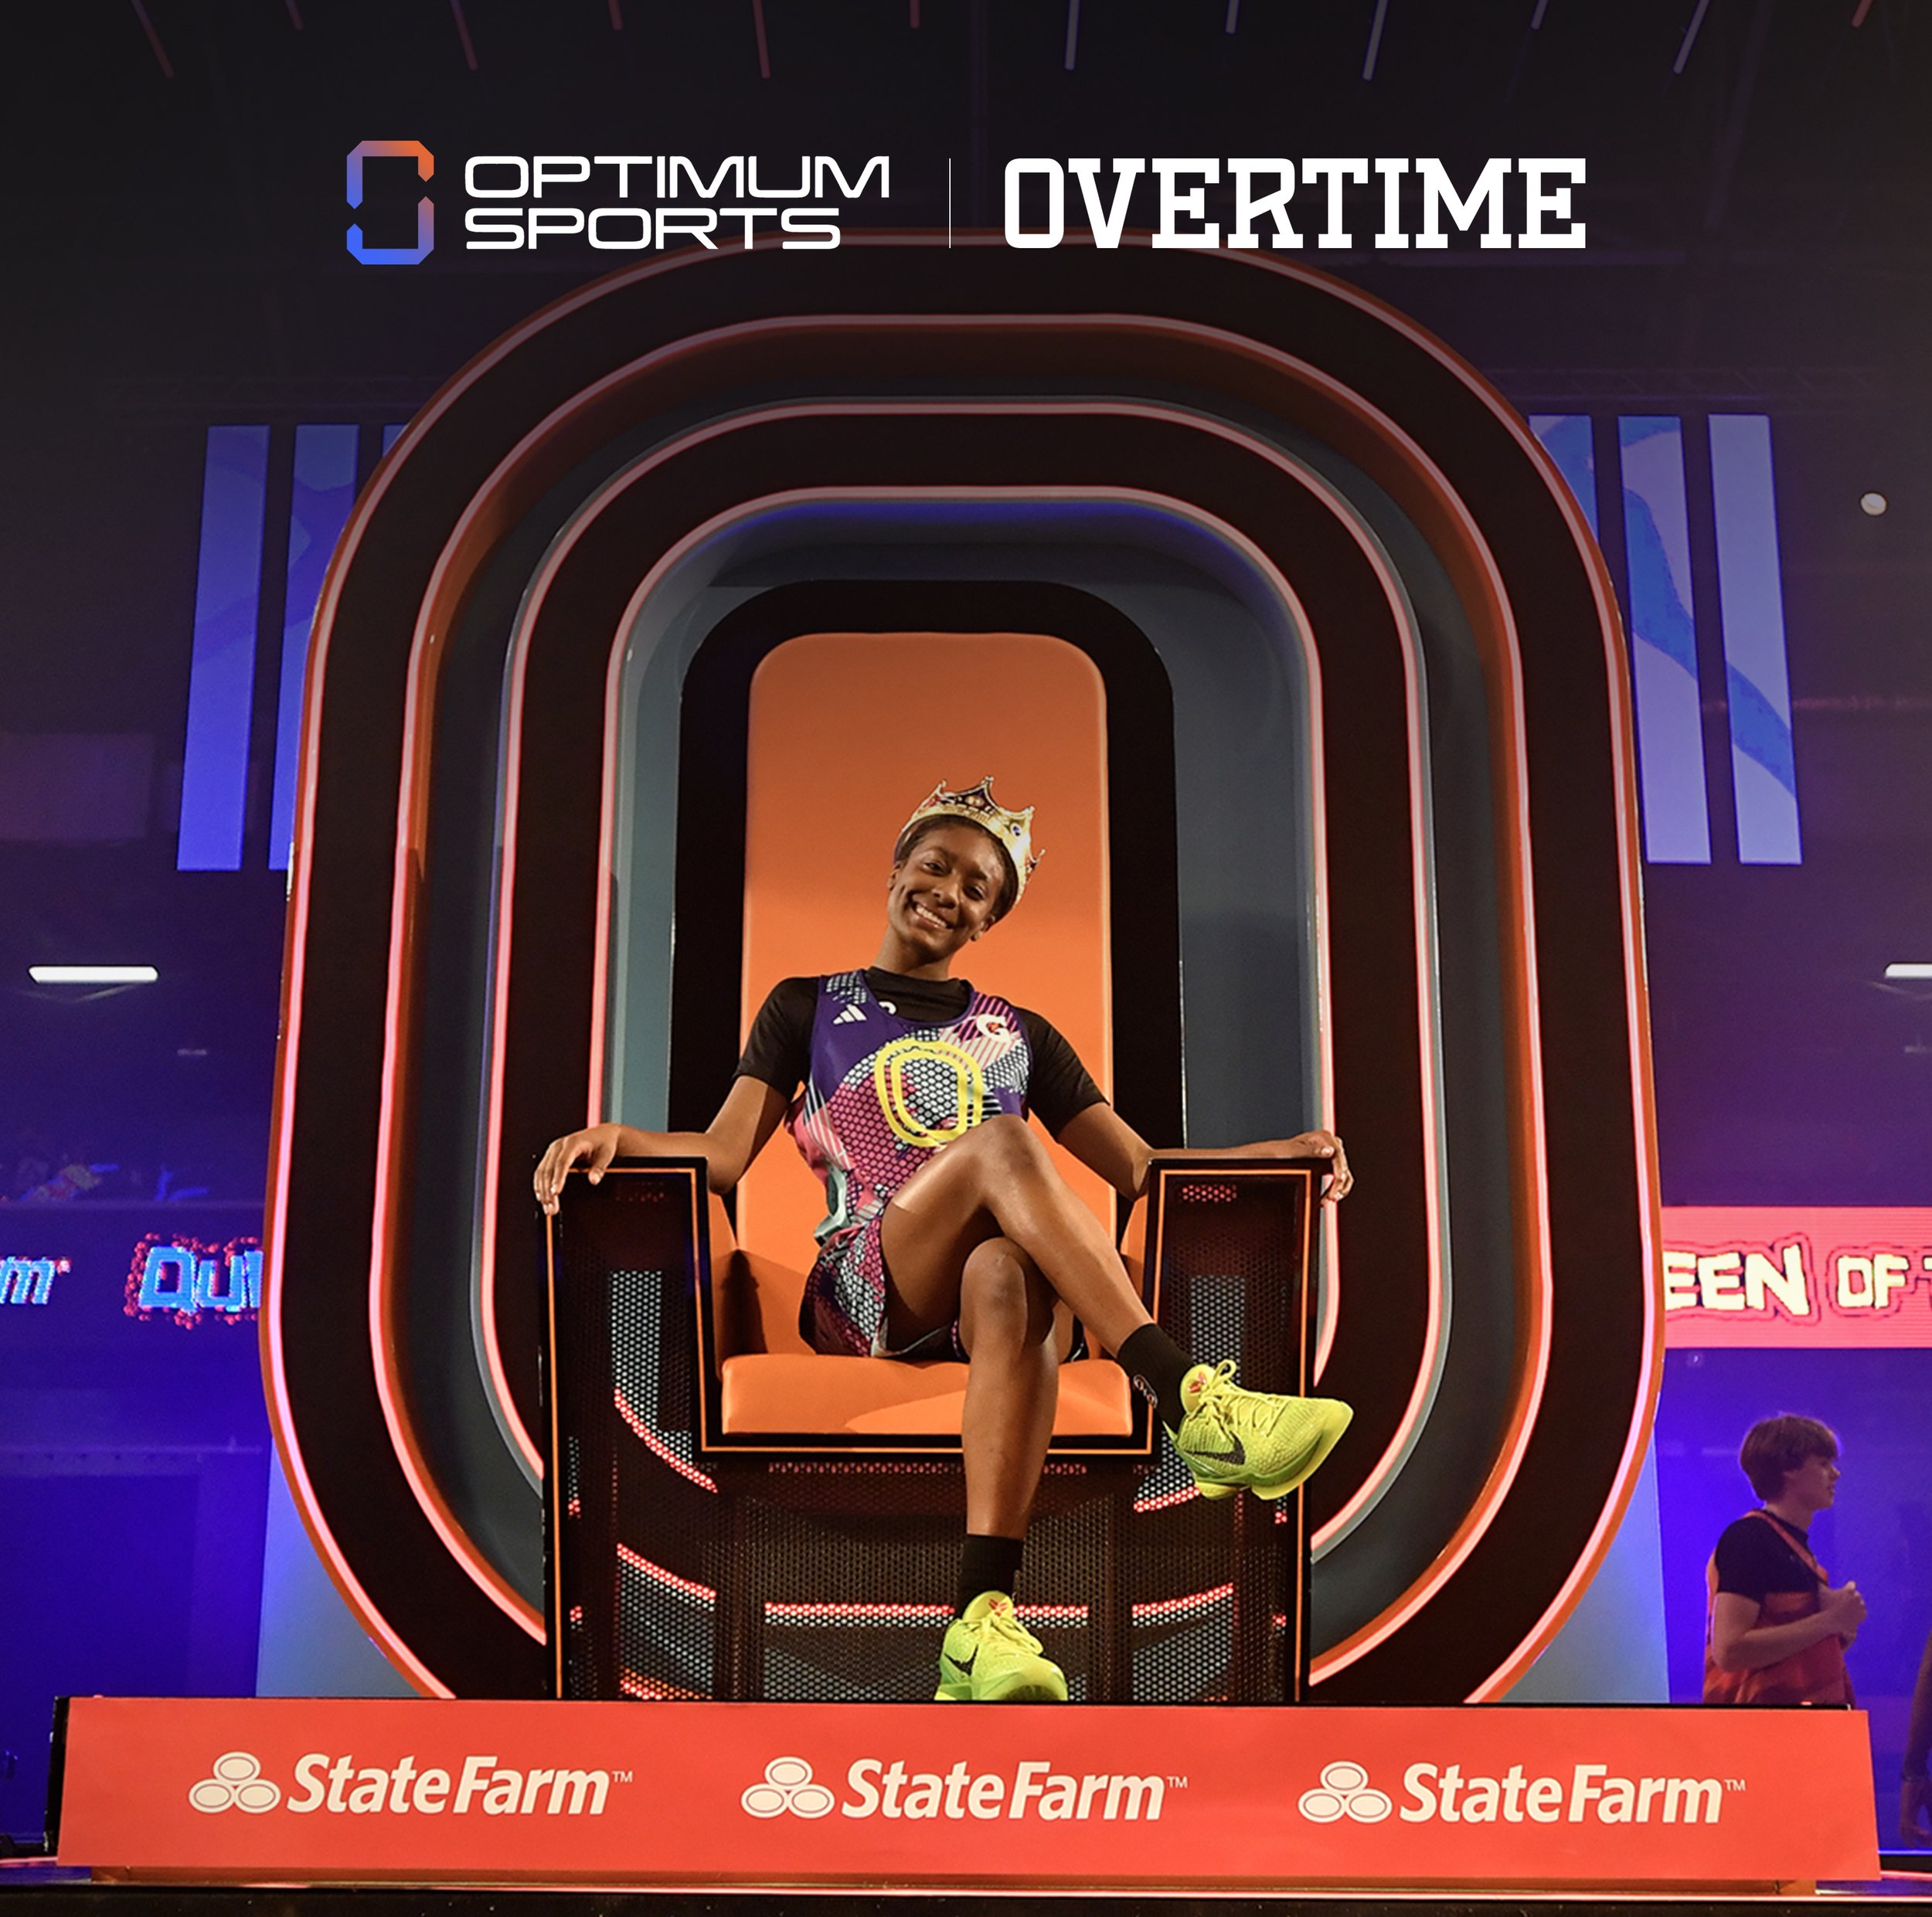 OS Overtime WNBA Event alt 1.jpg